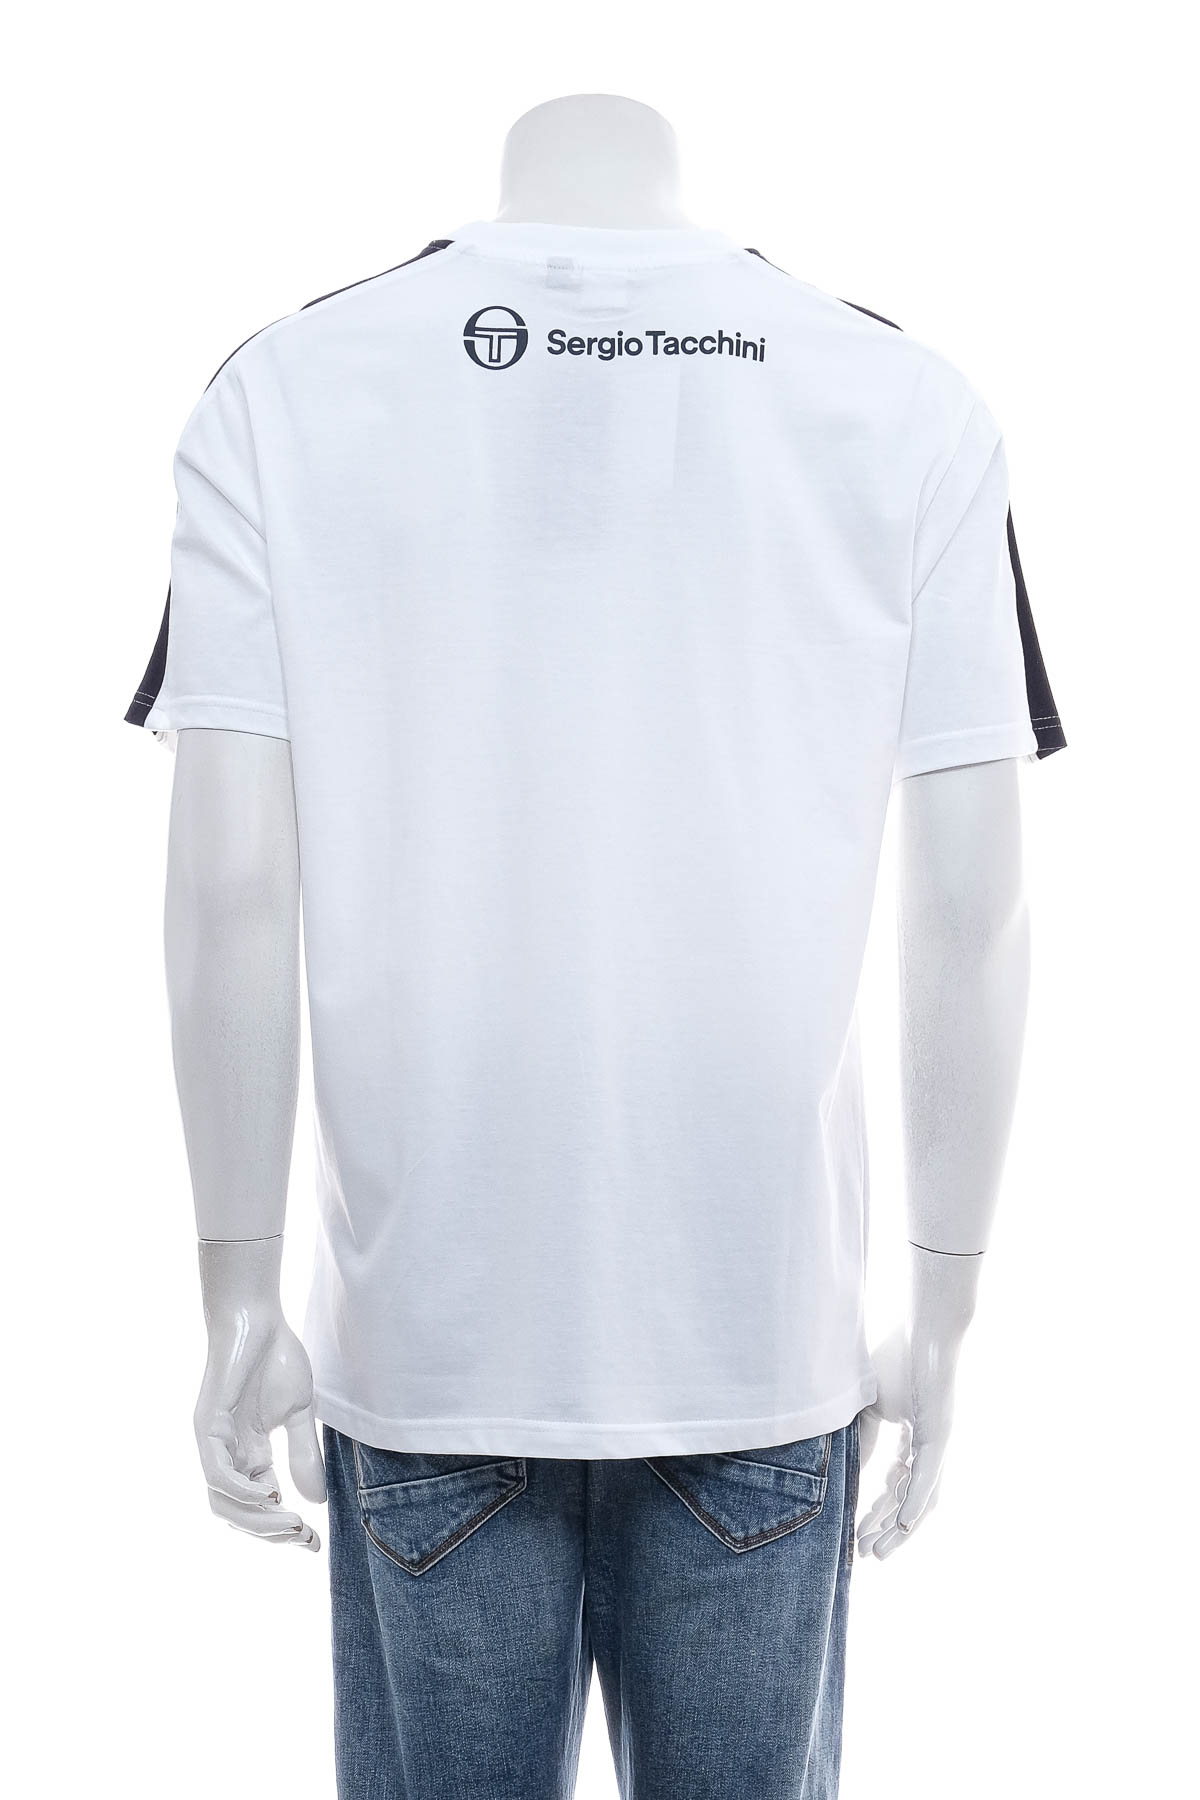 Men's T-shirt - Sergio Tacchini - 1